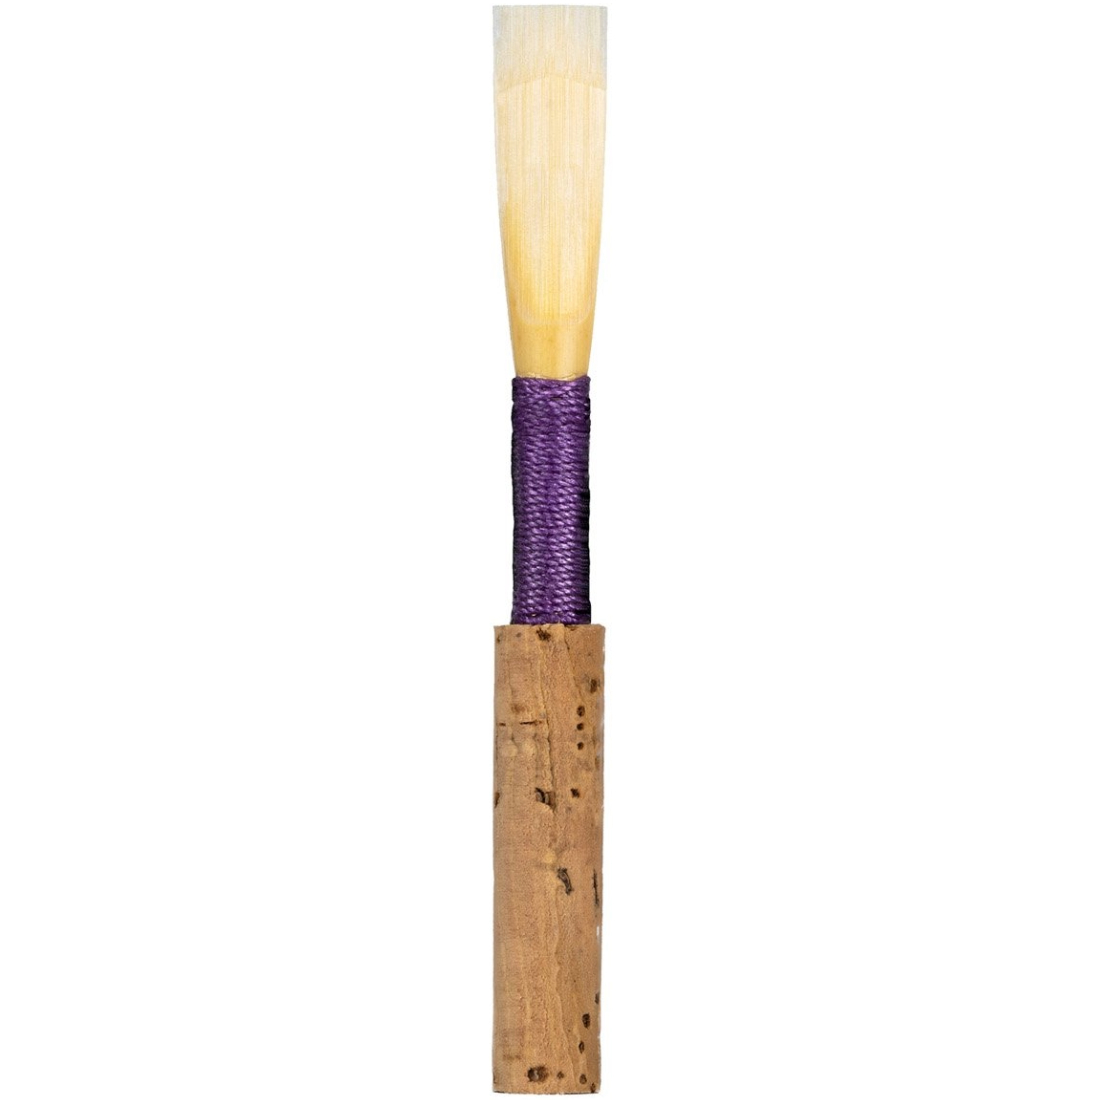 Jones Artist series Oboe Reed cane wound with purple string - strength of Medium